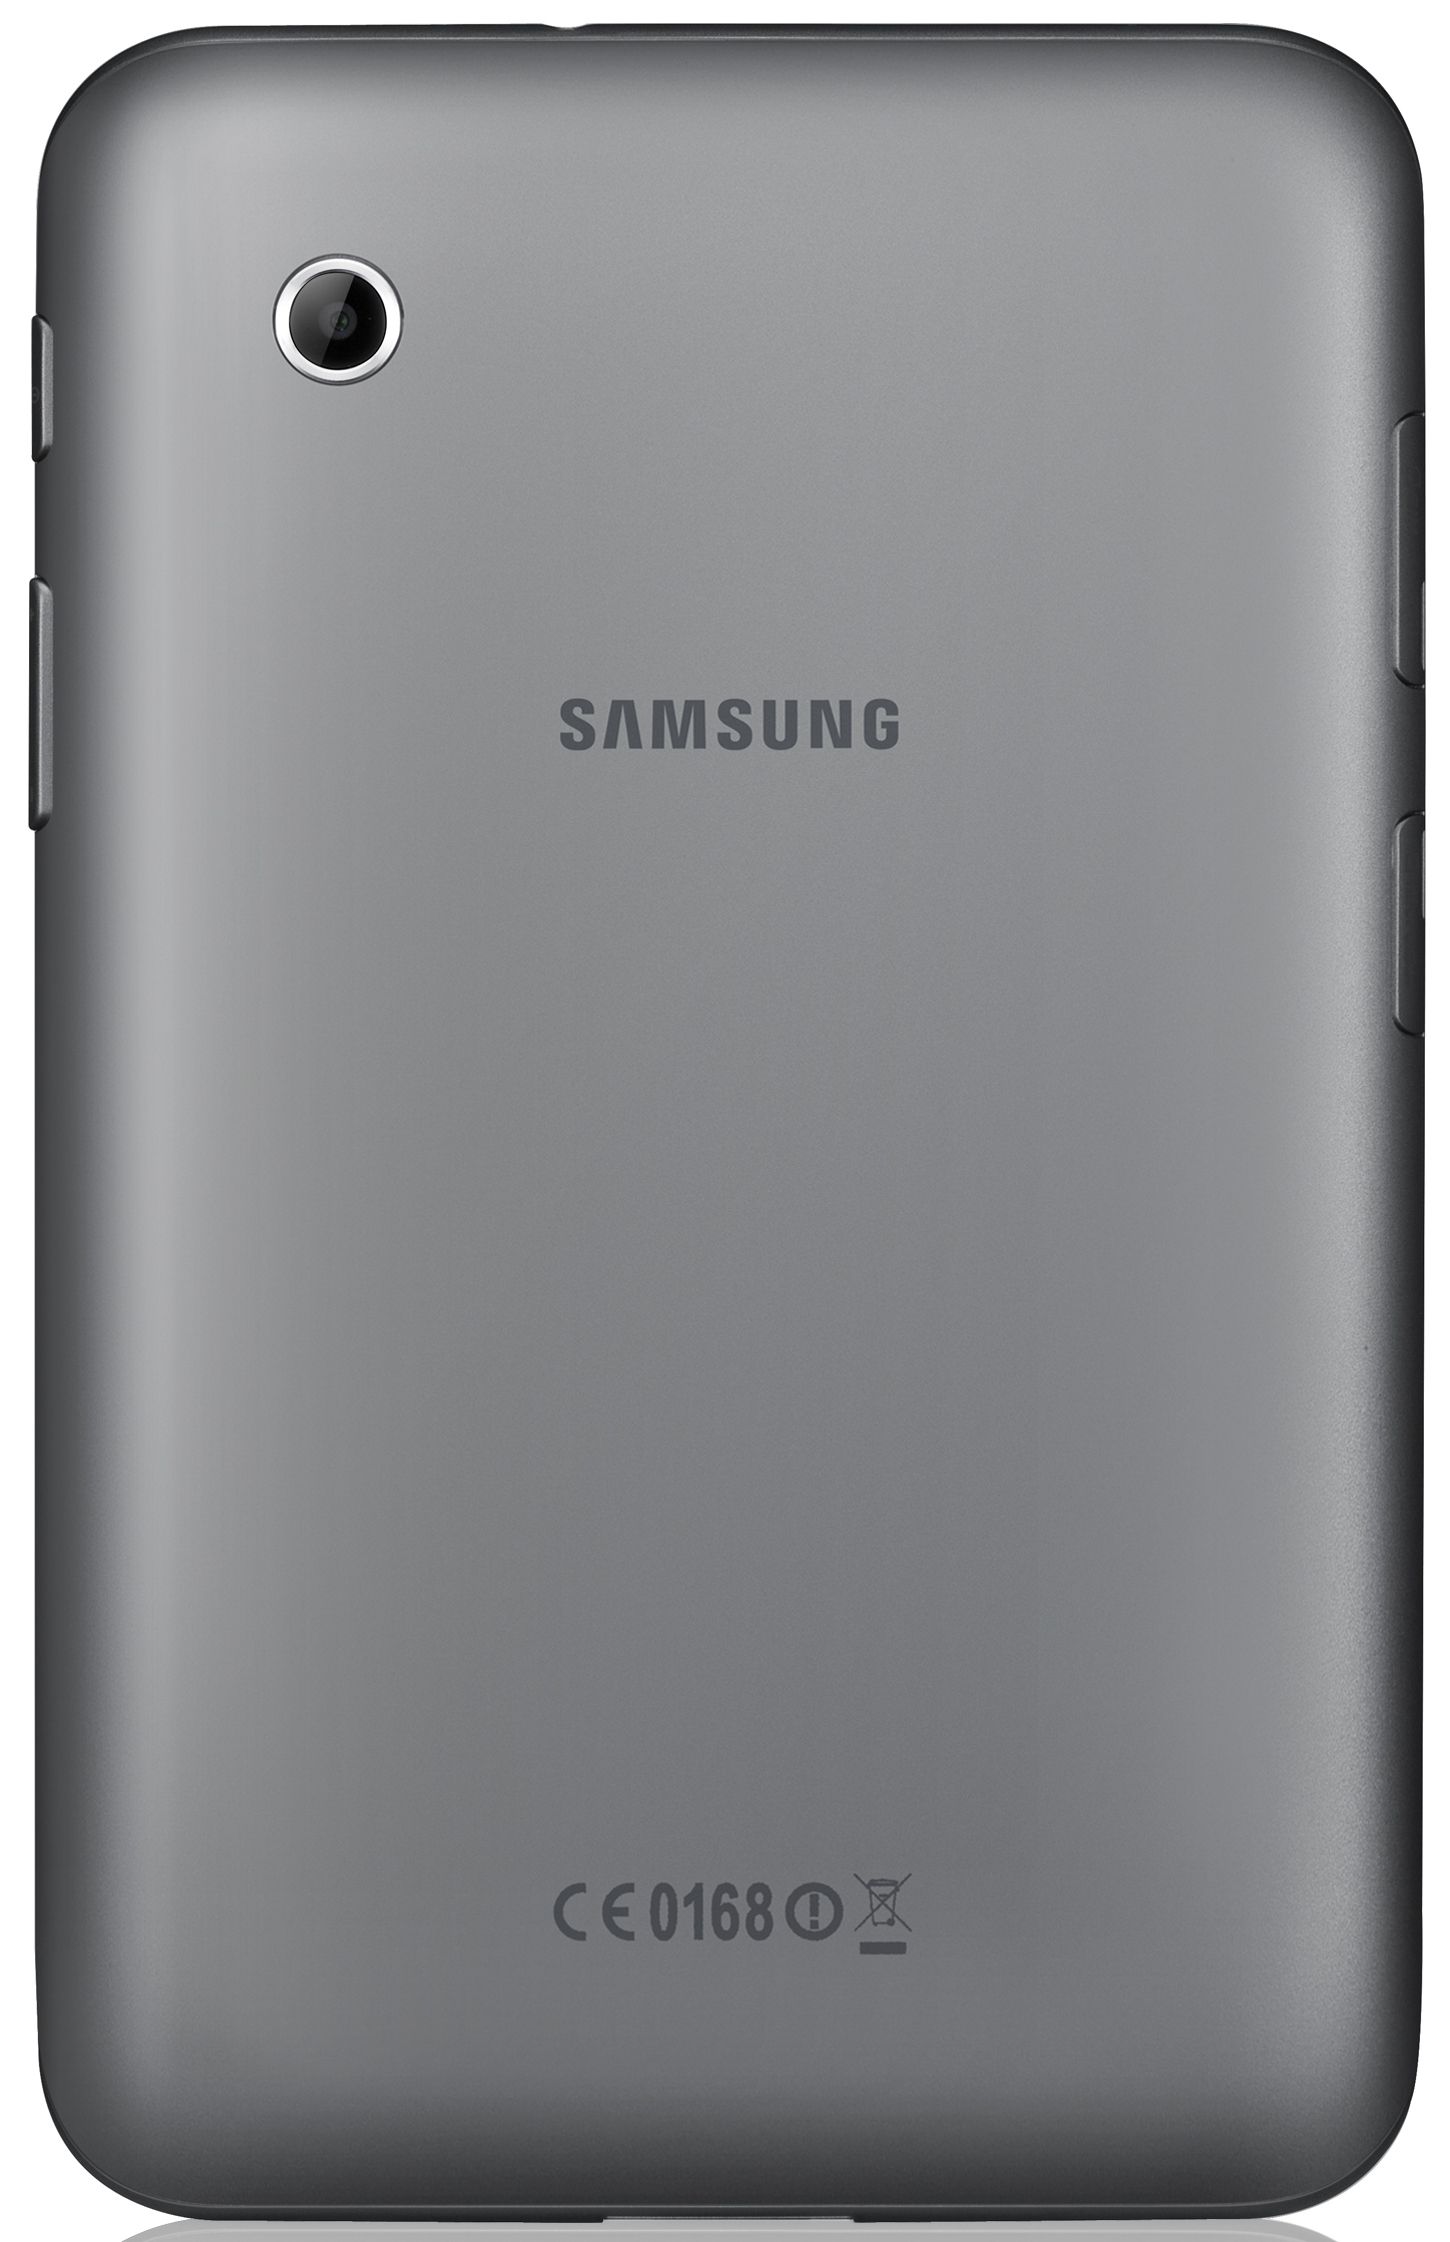 Samsung 2 7.0. Galaxy Tab 2 7.0 p3110. Планшет самсунг gt-p3100. Samsung Galaxy Tab 2 7.0 8gb. Samsung Galaxy Tab 2 7.0 p3100.